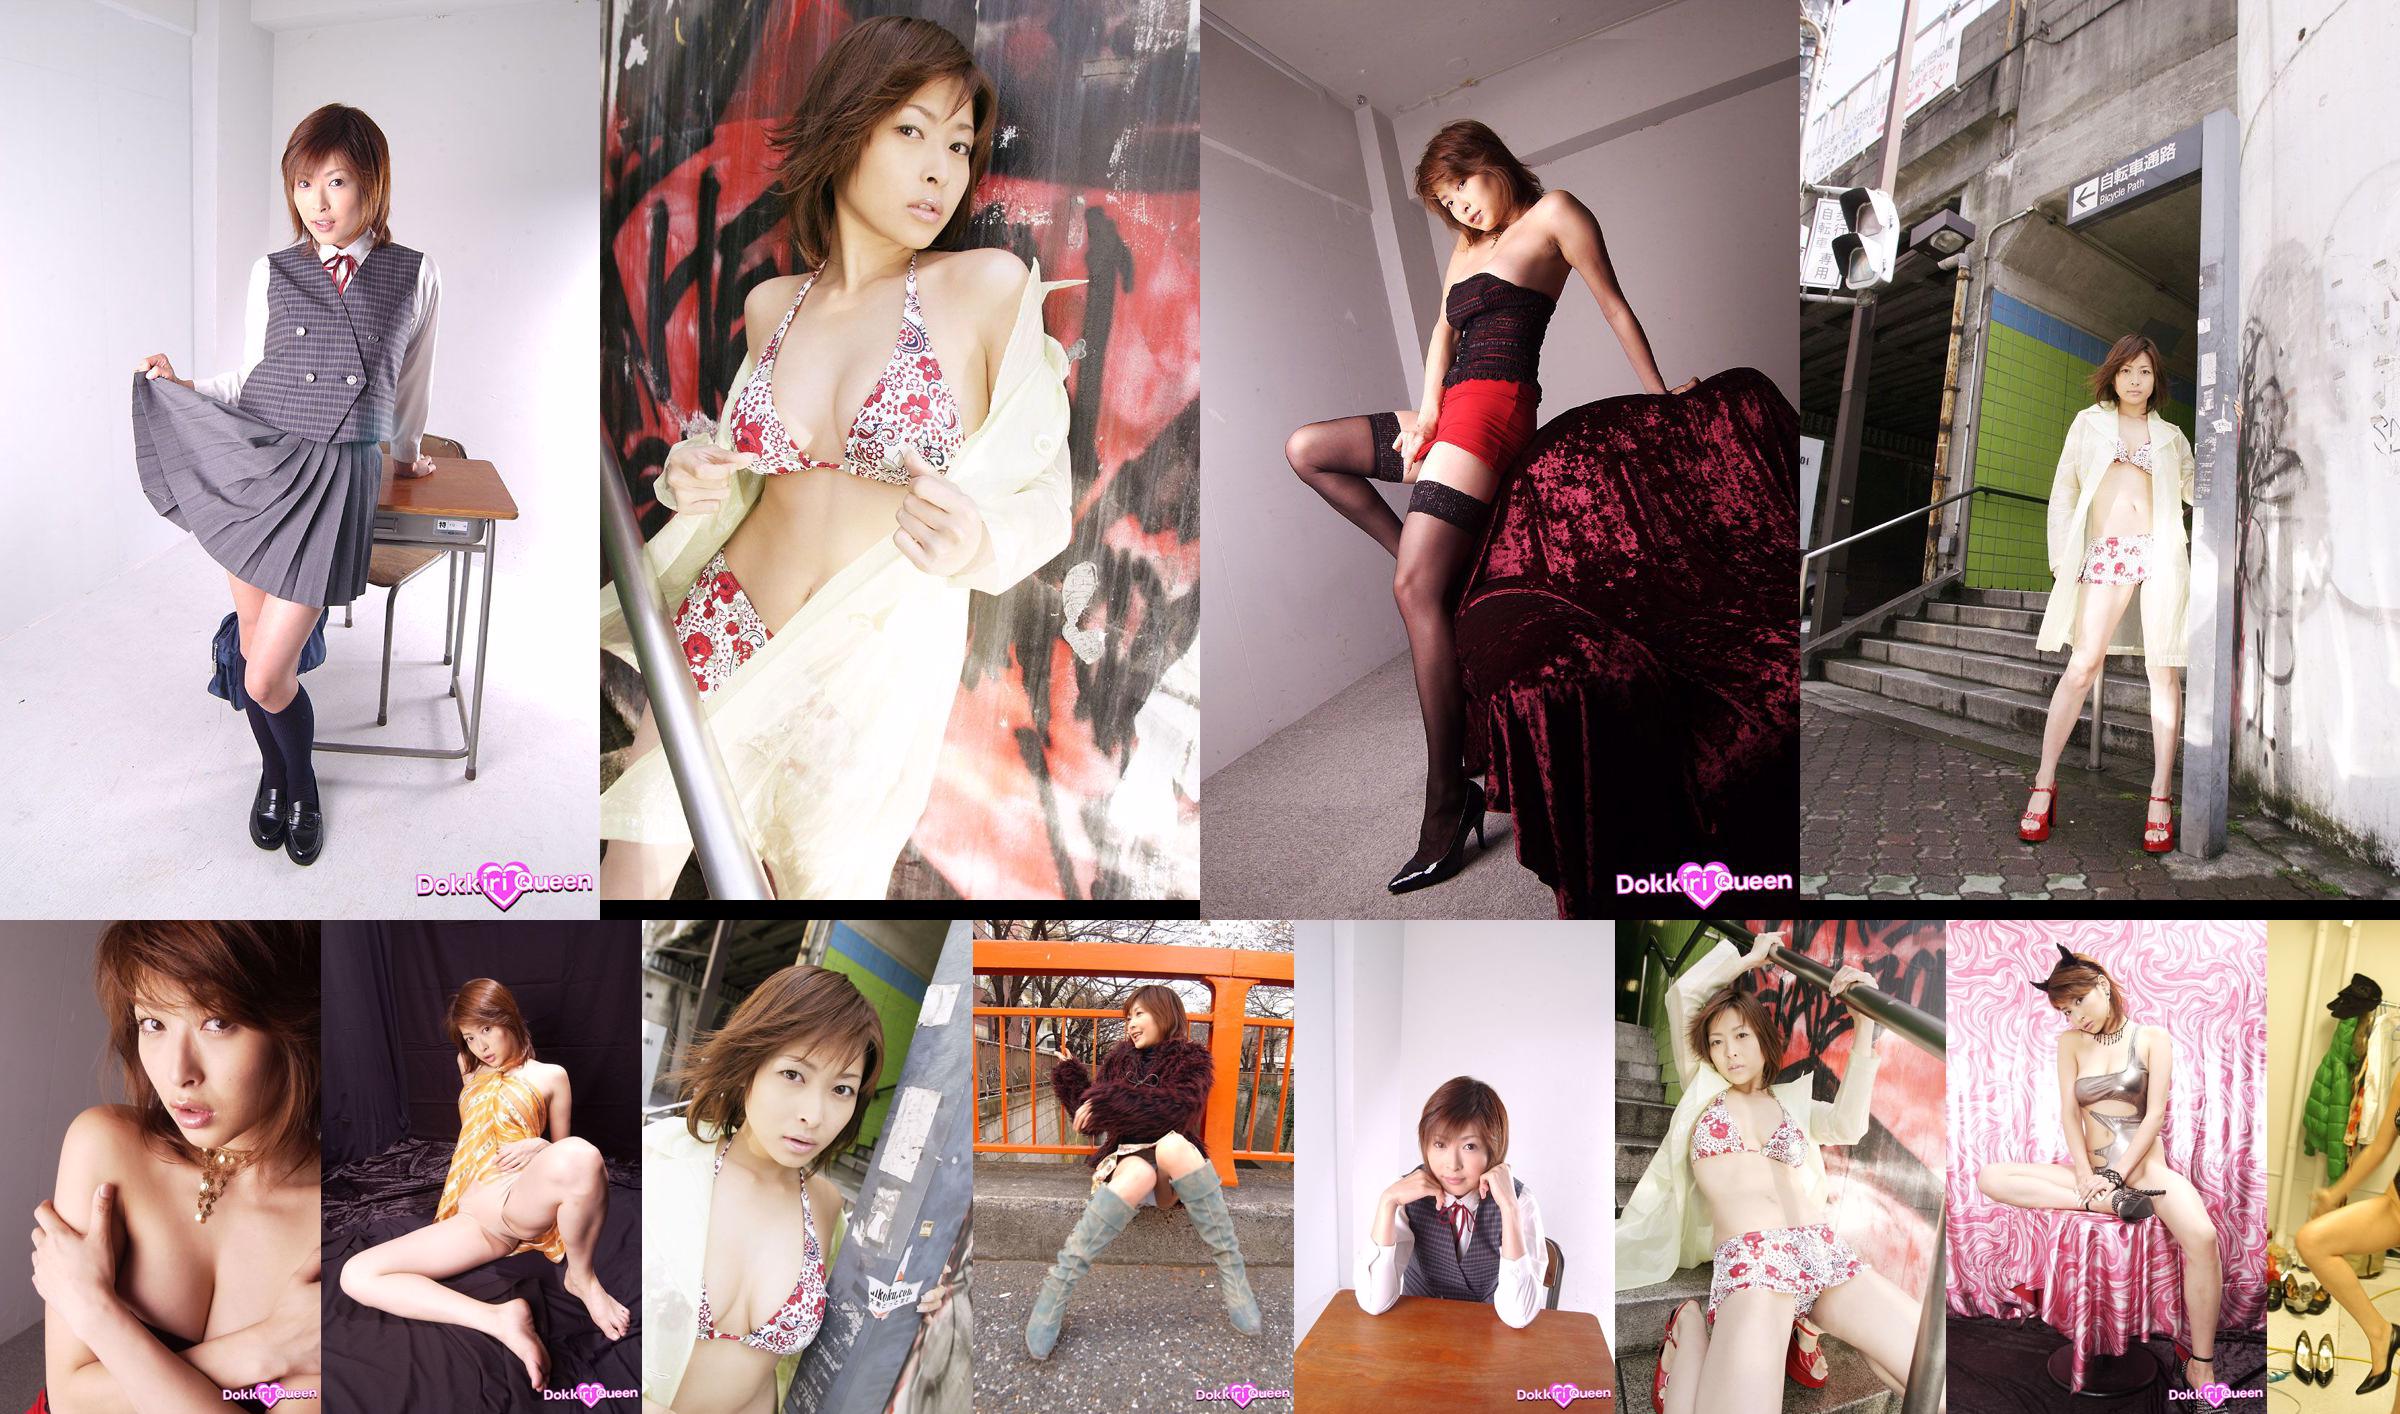 [X-City] Dokkiri-Königin Nr. 017 Nana Natsume / Nana Natsome-Profil No.fb172d Seite 2